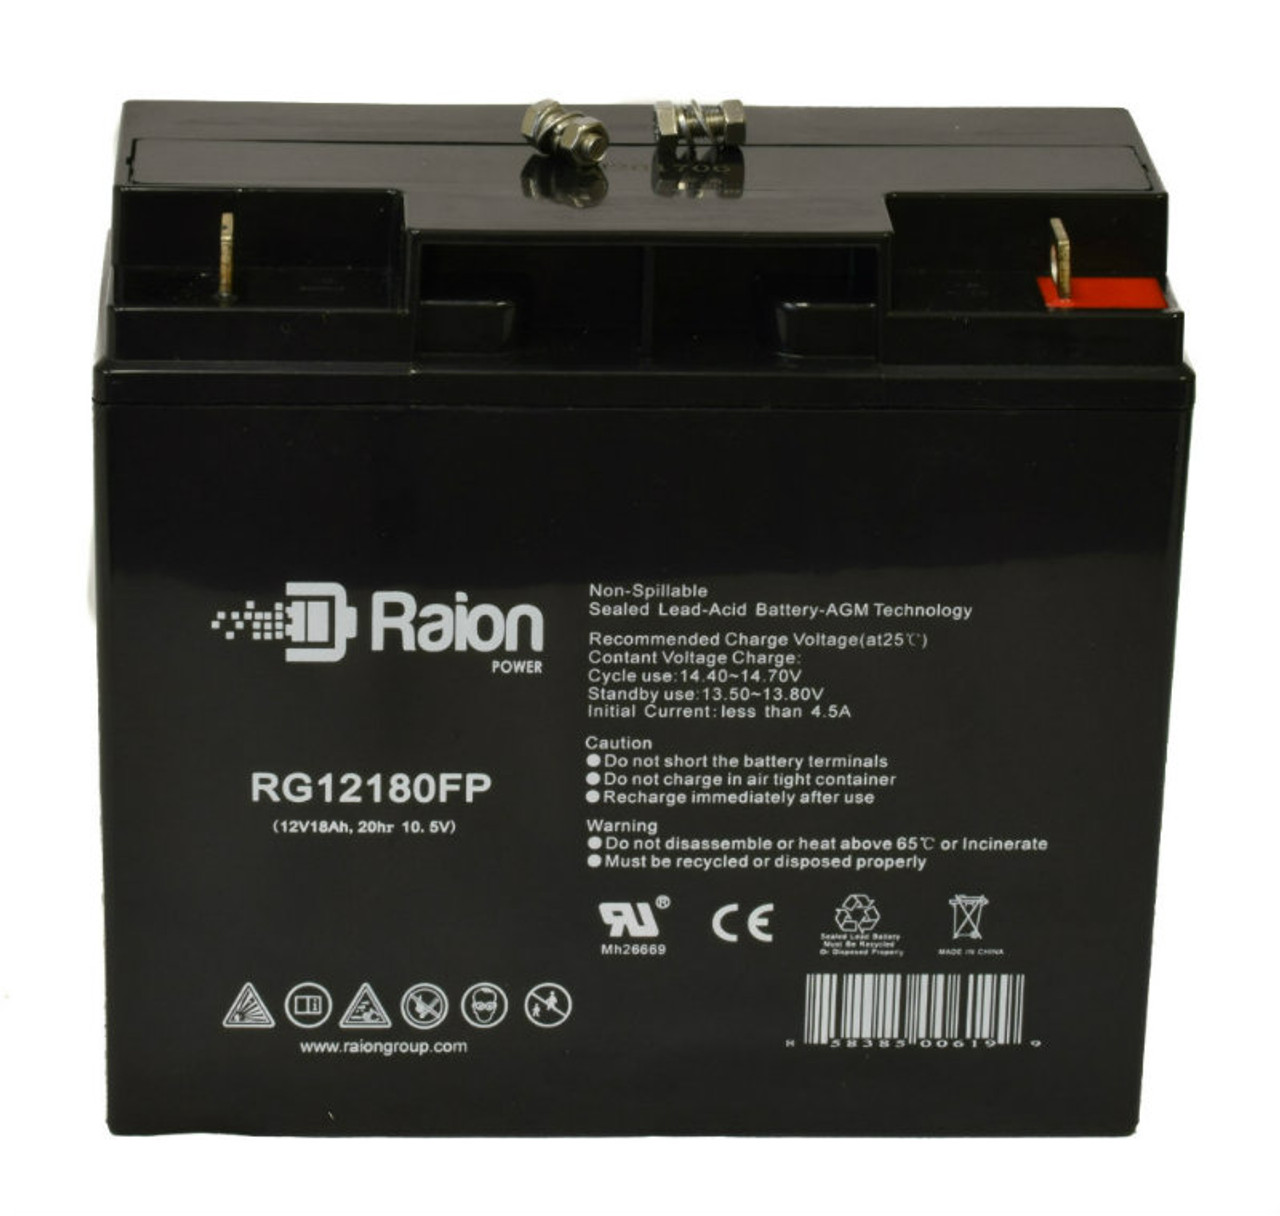 Raion Power RG12180FP 12V 18Ah Lead Acid Battery for TPE RT12200H